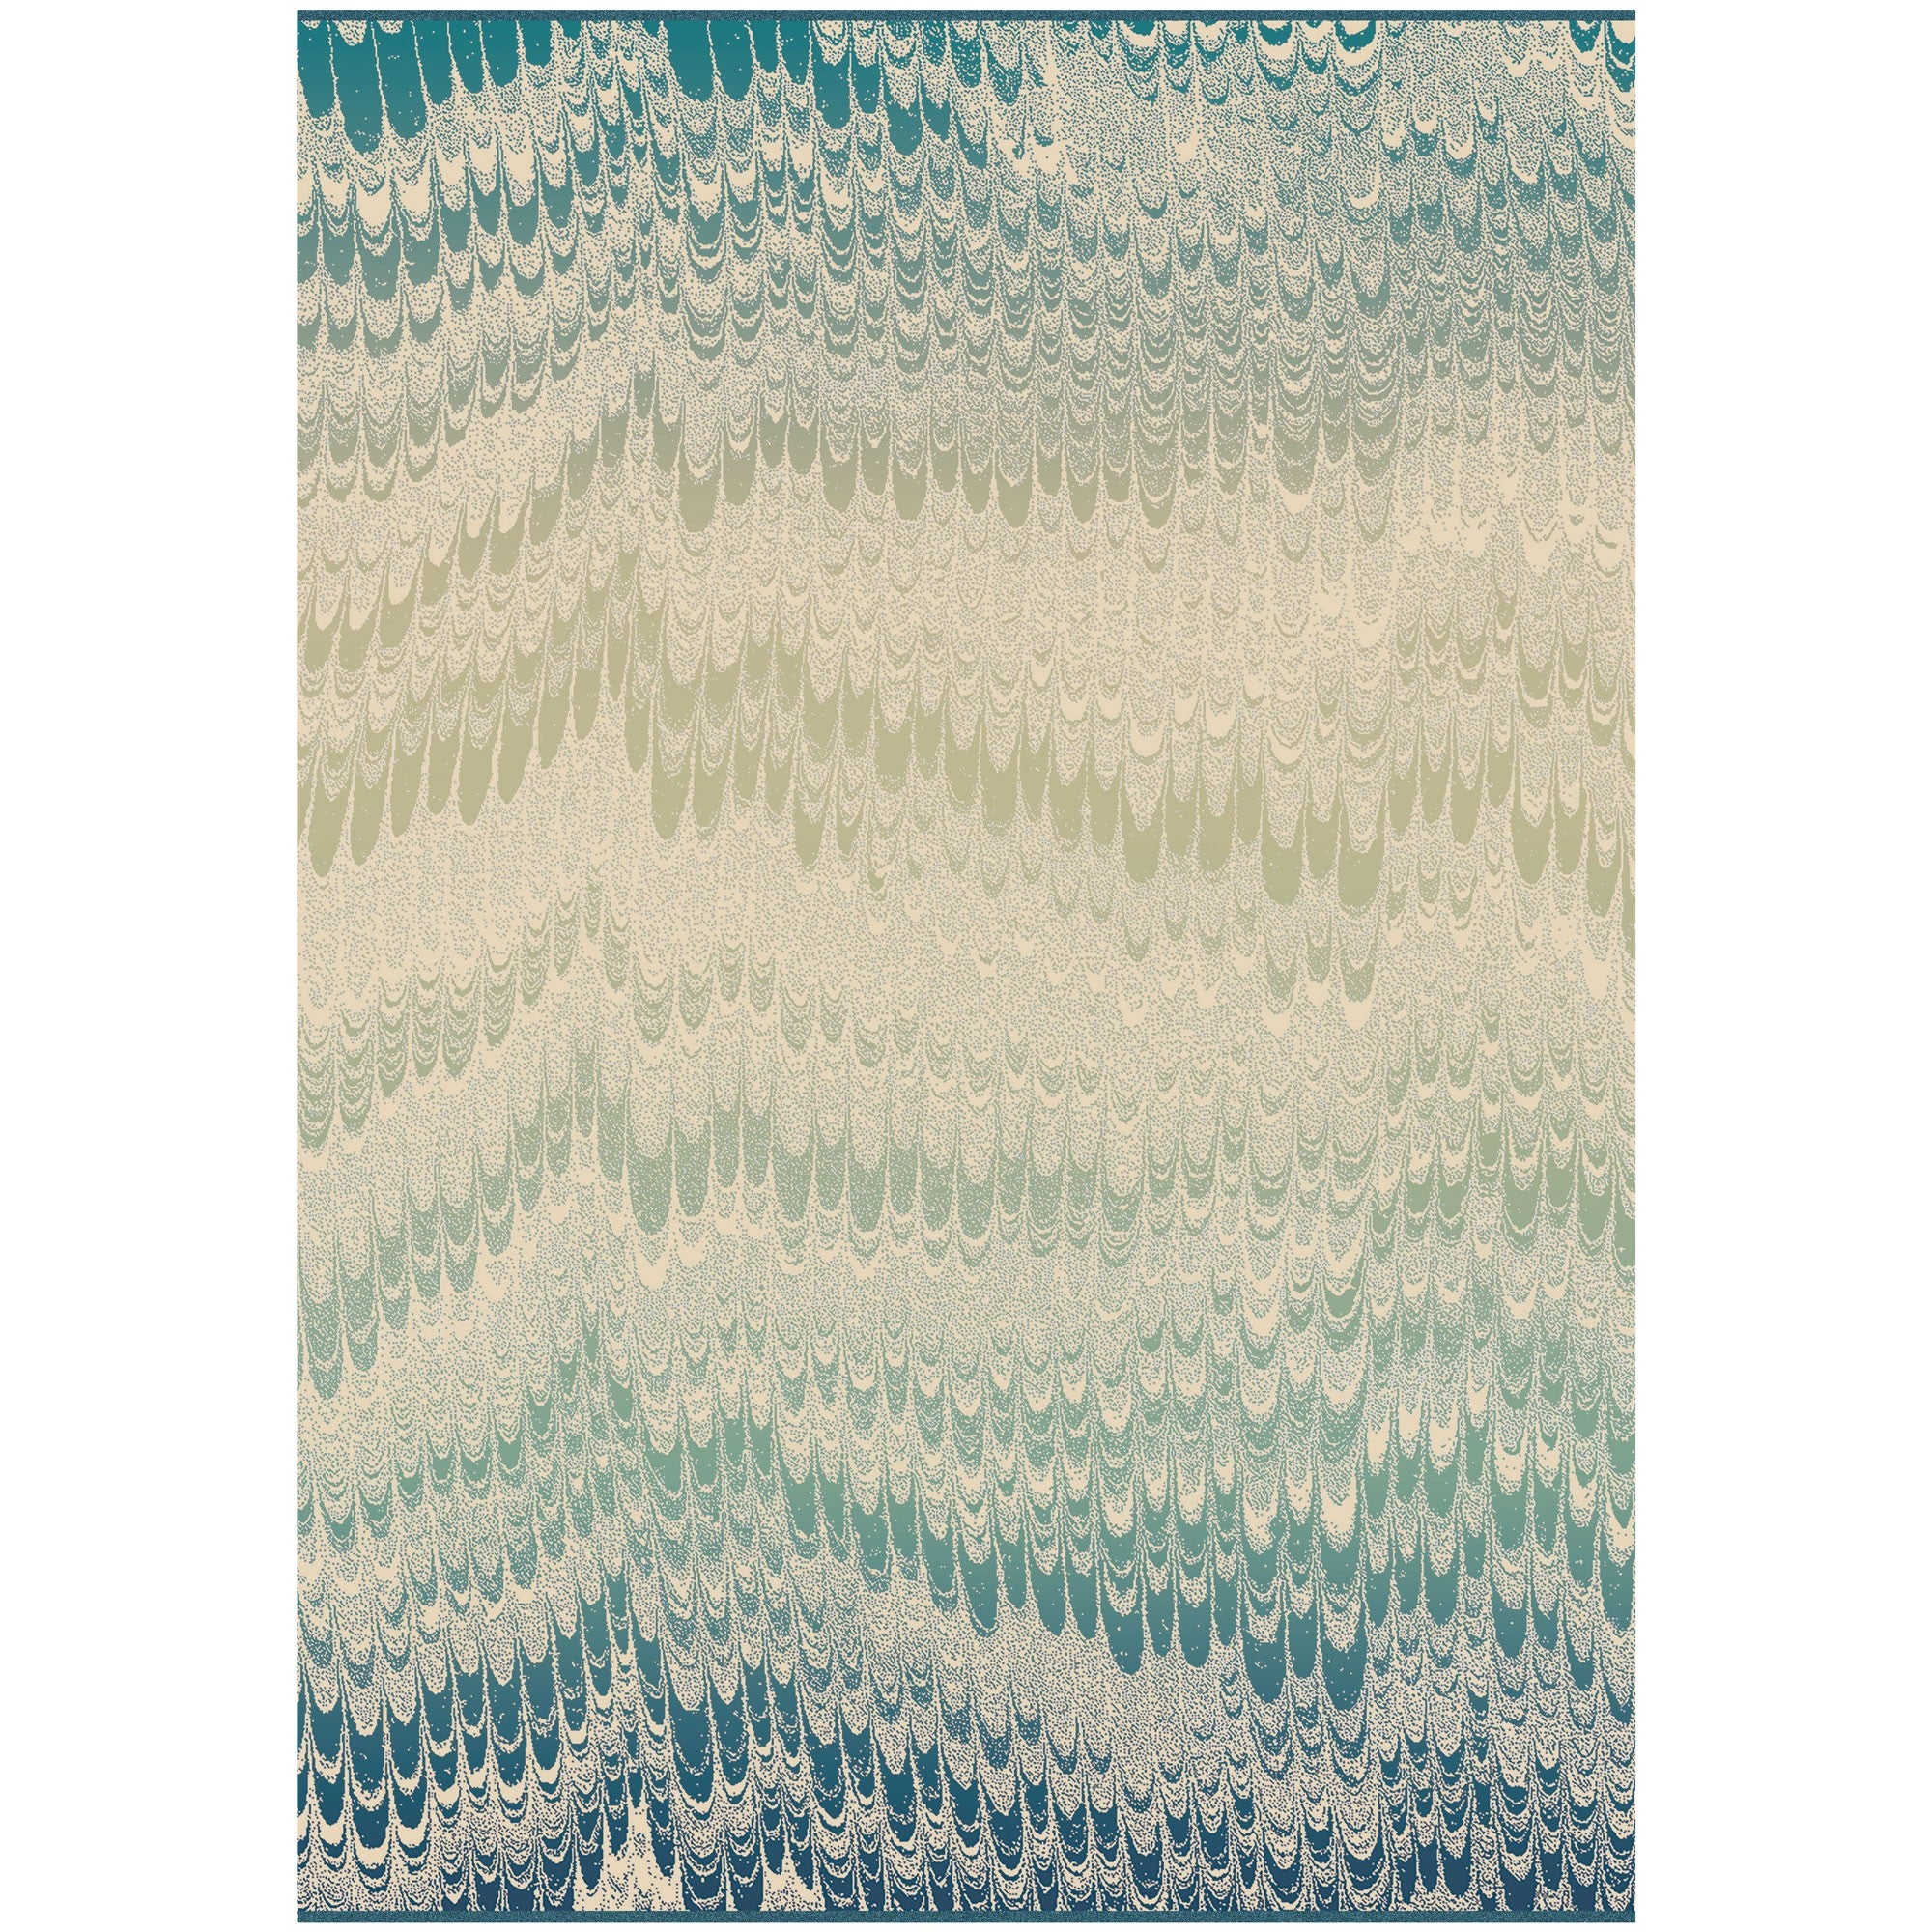 Design rug Peacock Lagoon vinyl rug